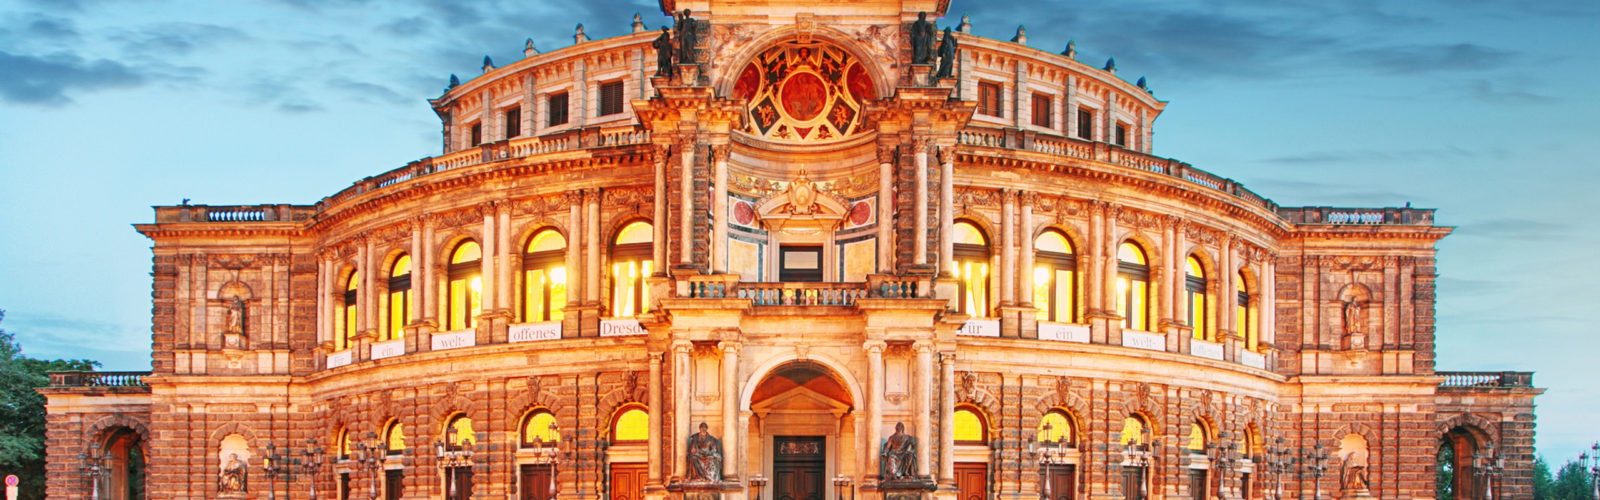 Semper Opera house in Dresden